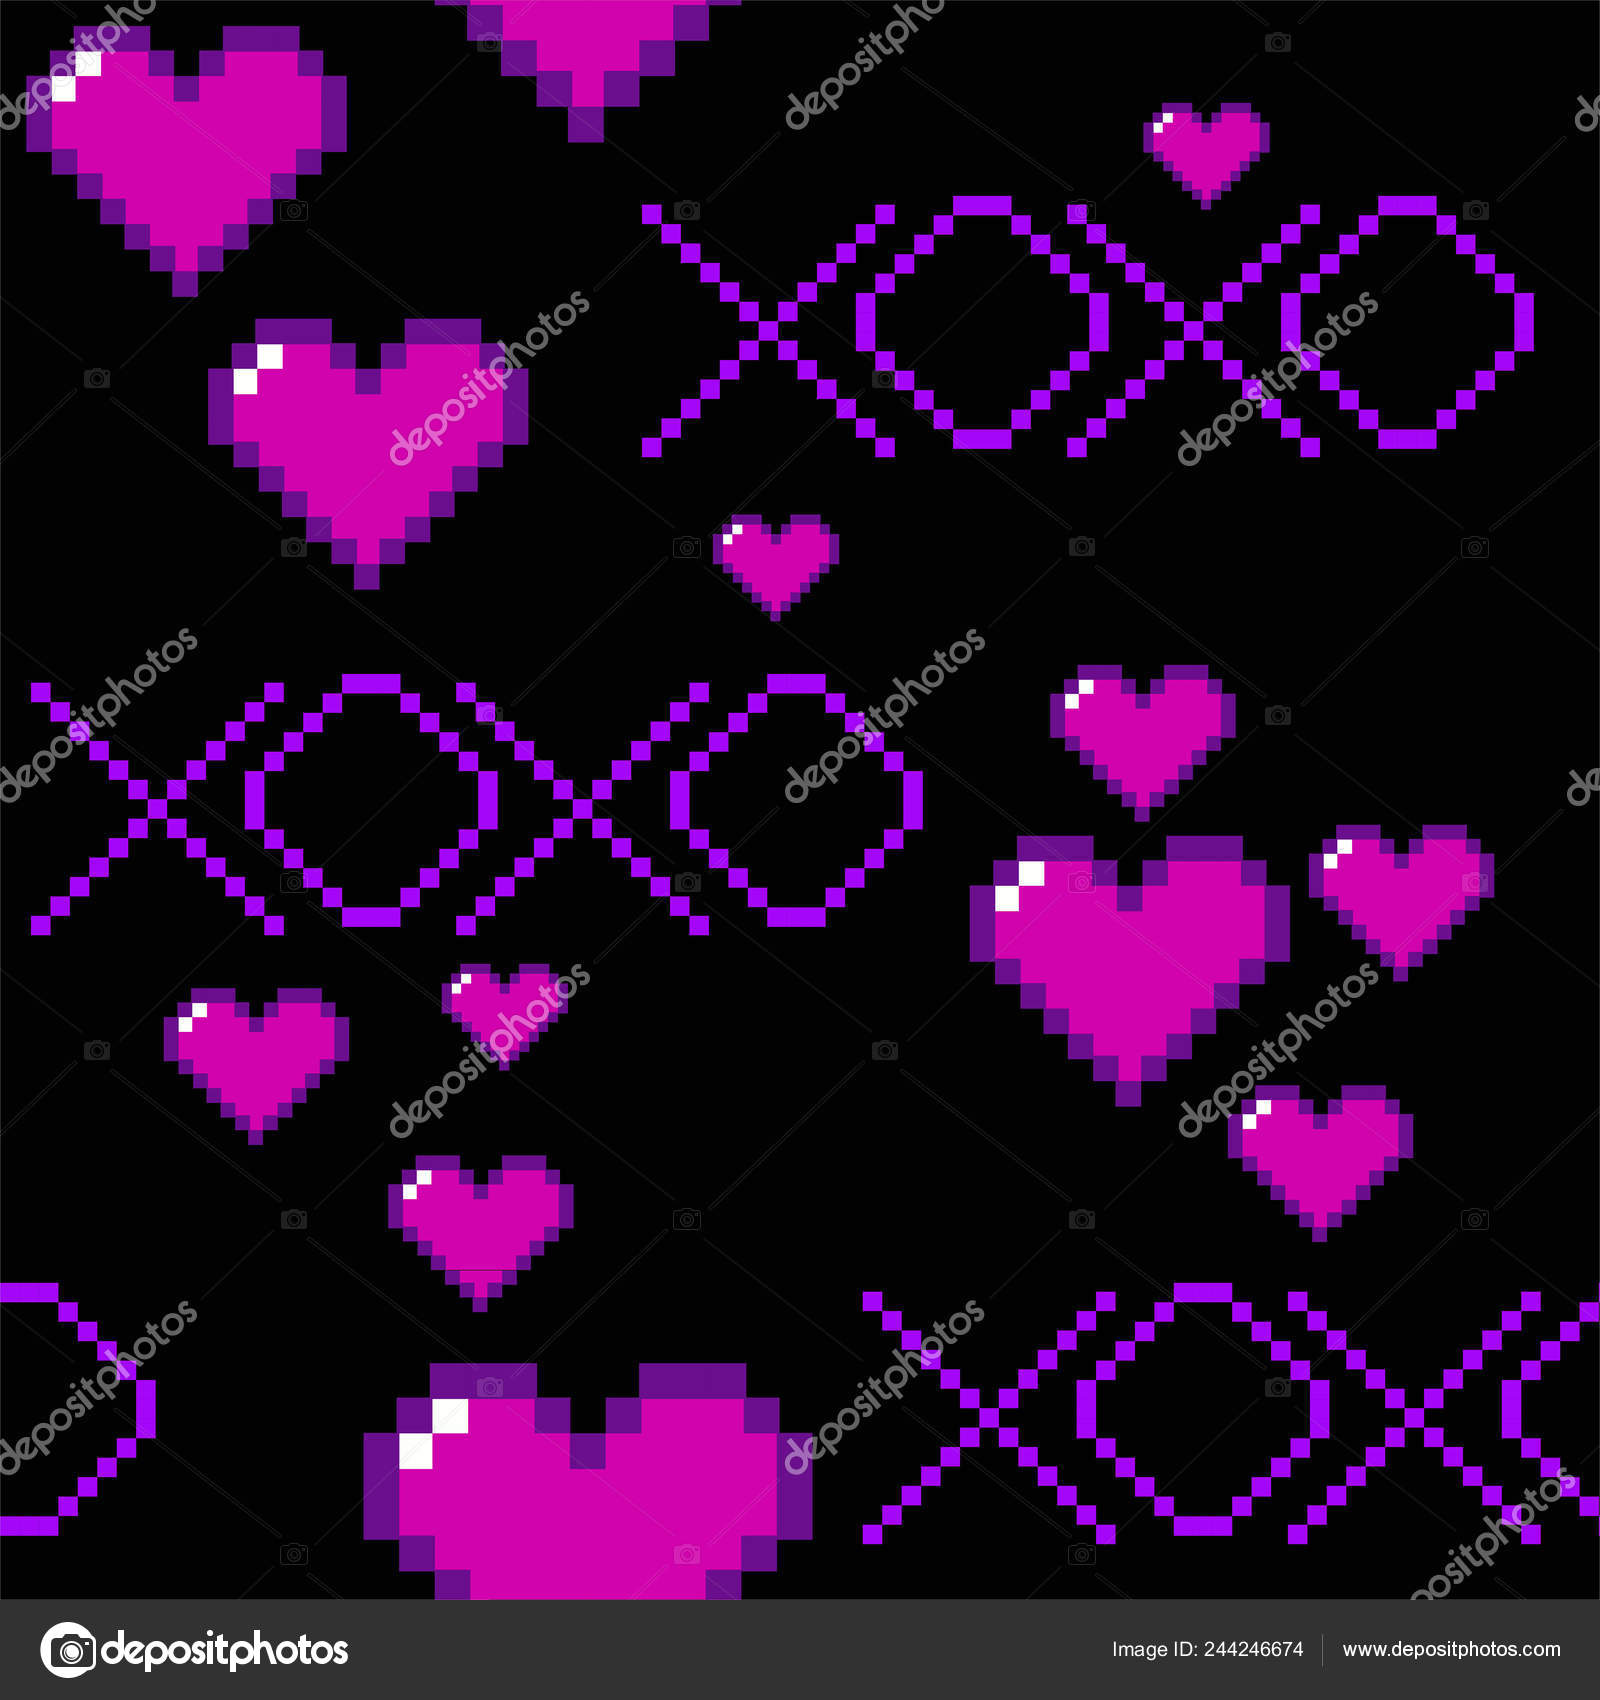 Background Pixel Kawaii Heart Seamless Vector Repeating Pattern Kawaii Pixel Heart Pixel Font Xoxo Stock Vector C Mnoelle